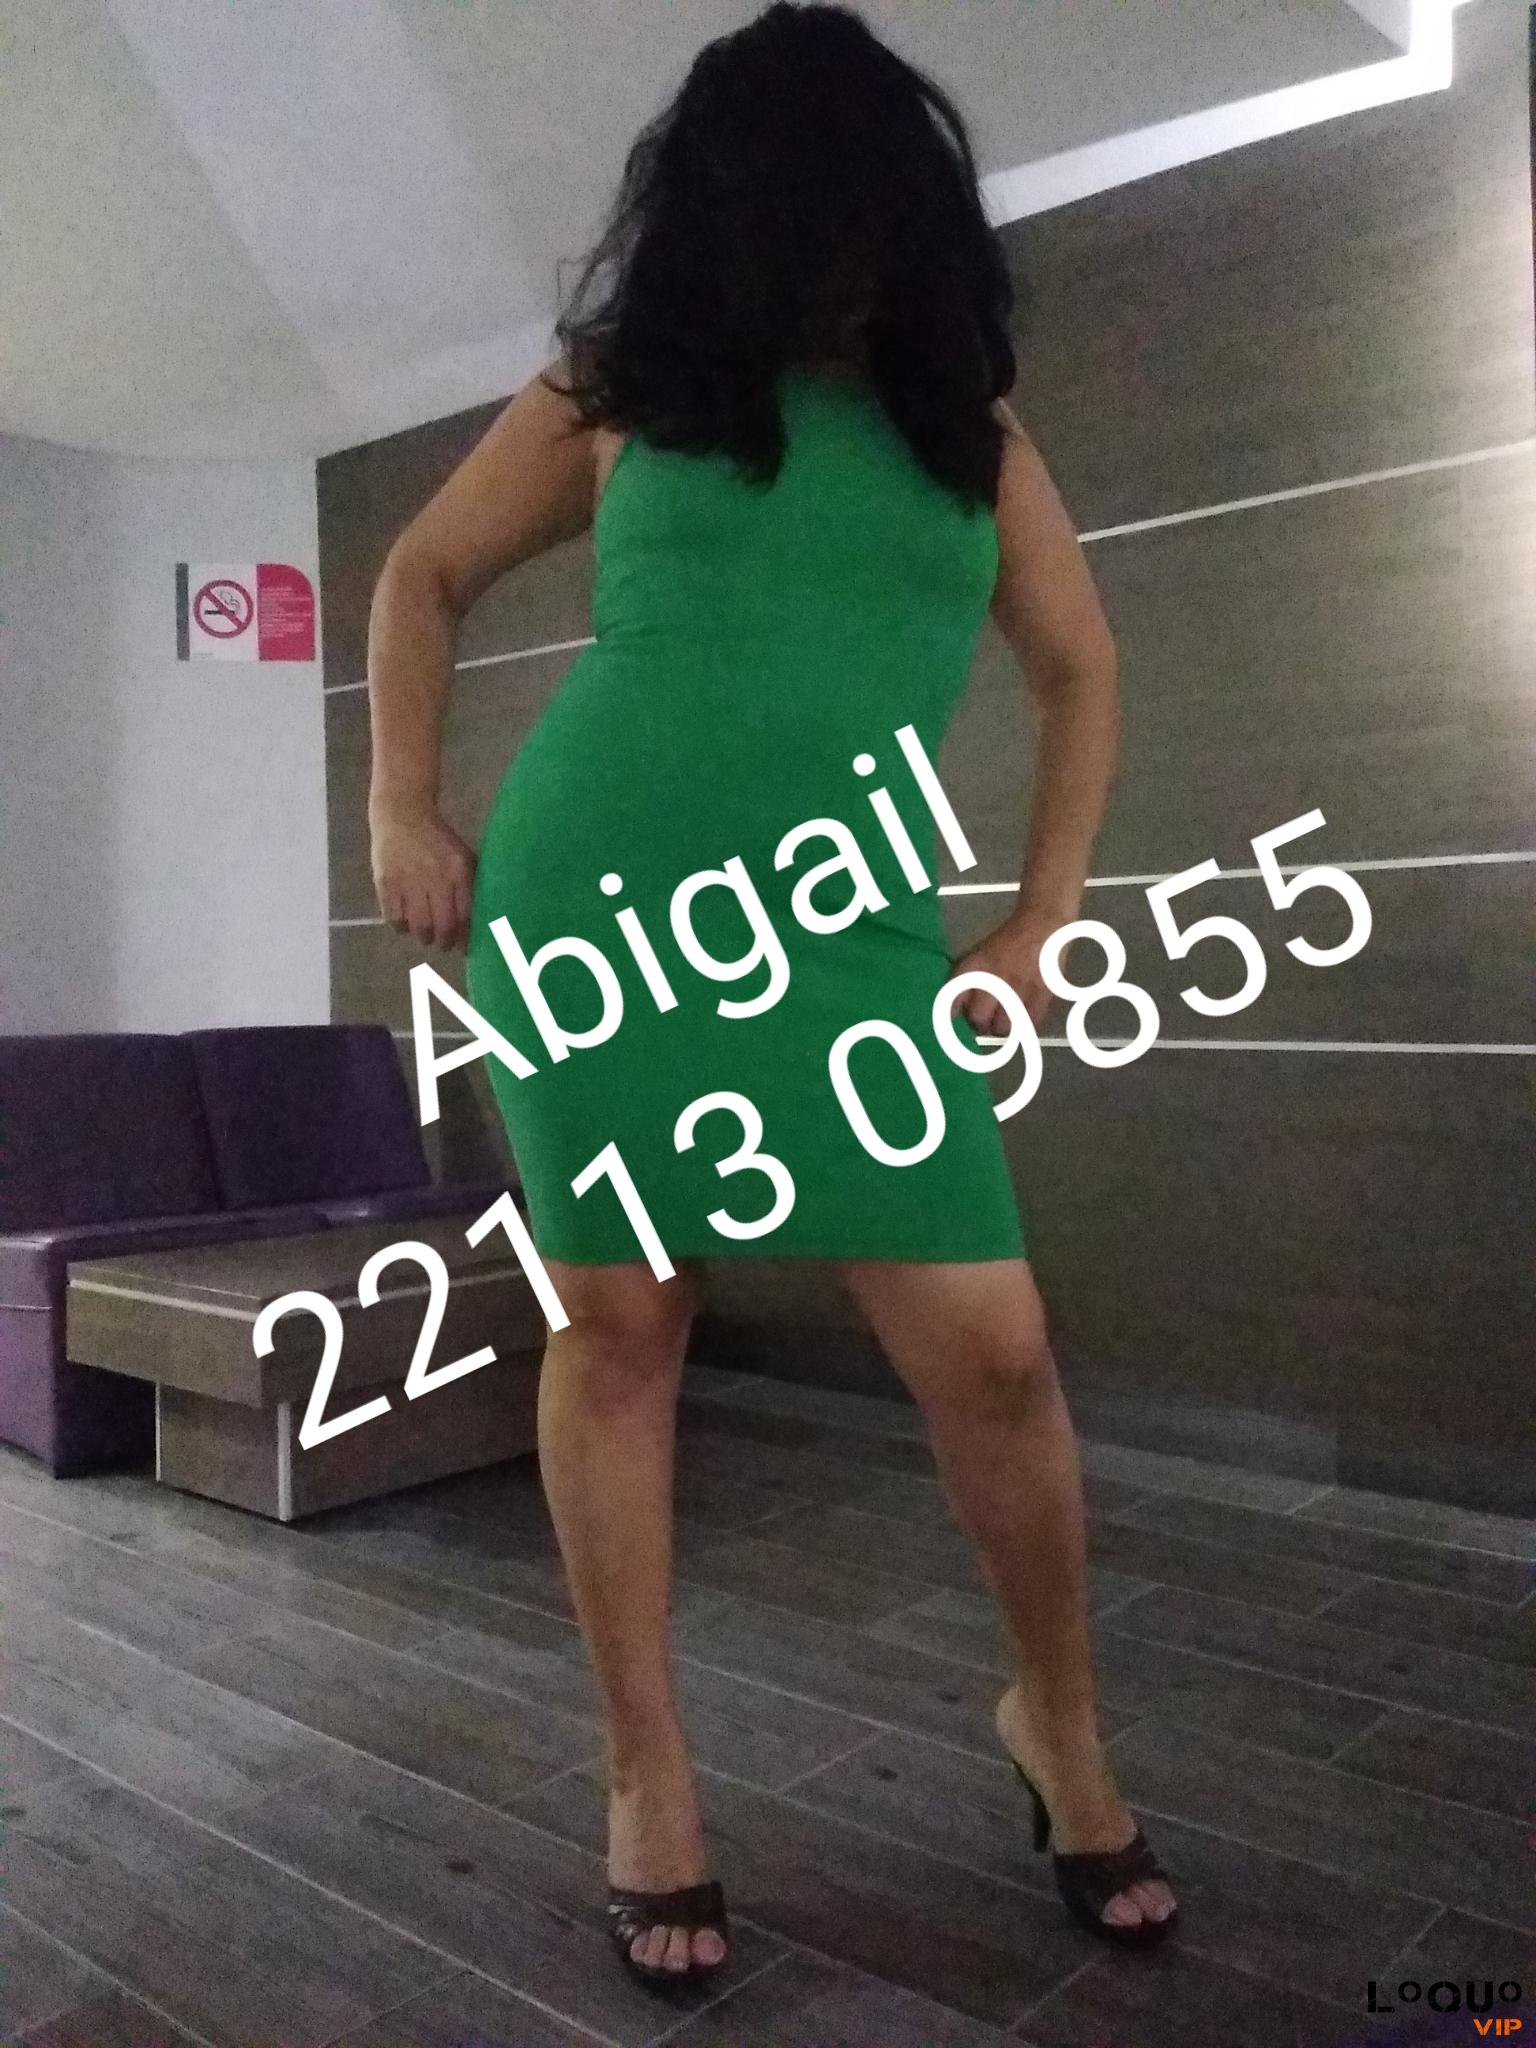 Putas Puebla: Abigail Madura Mujer Cuarentona Gordibuena Talla 13 XG Nalgona Caderona Sexy